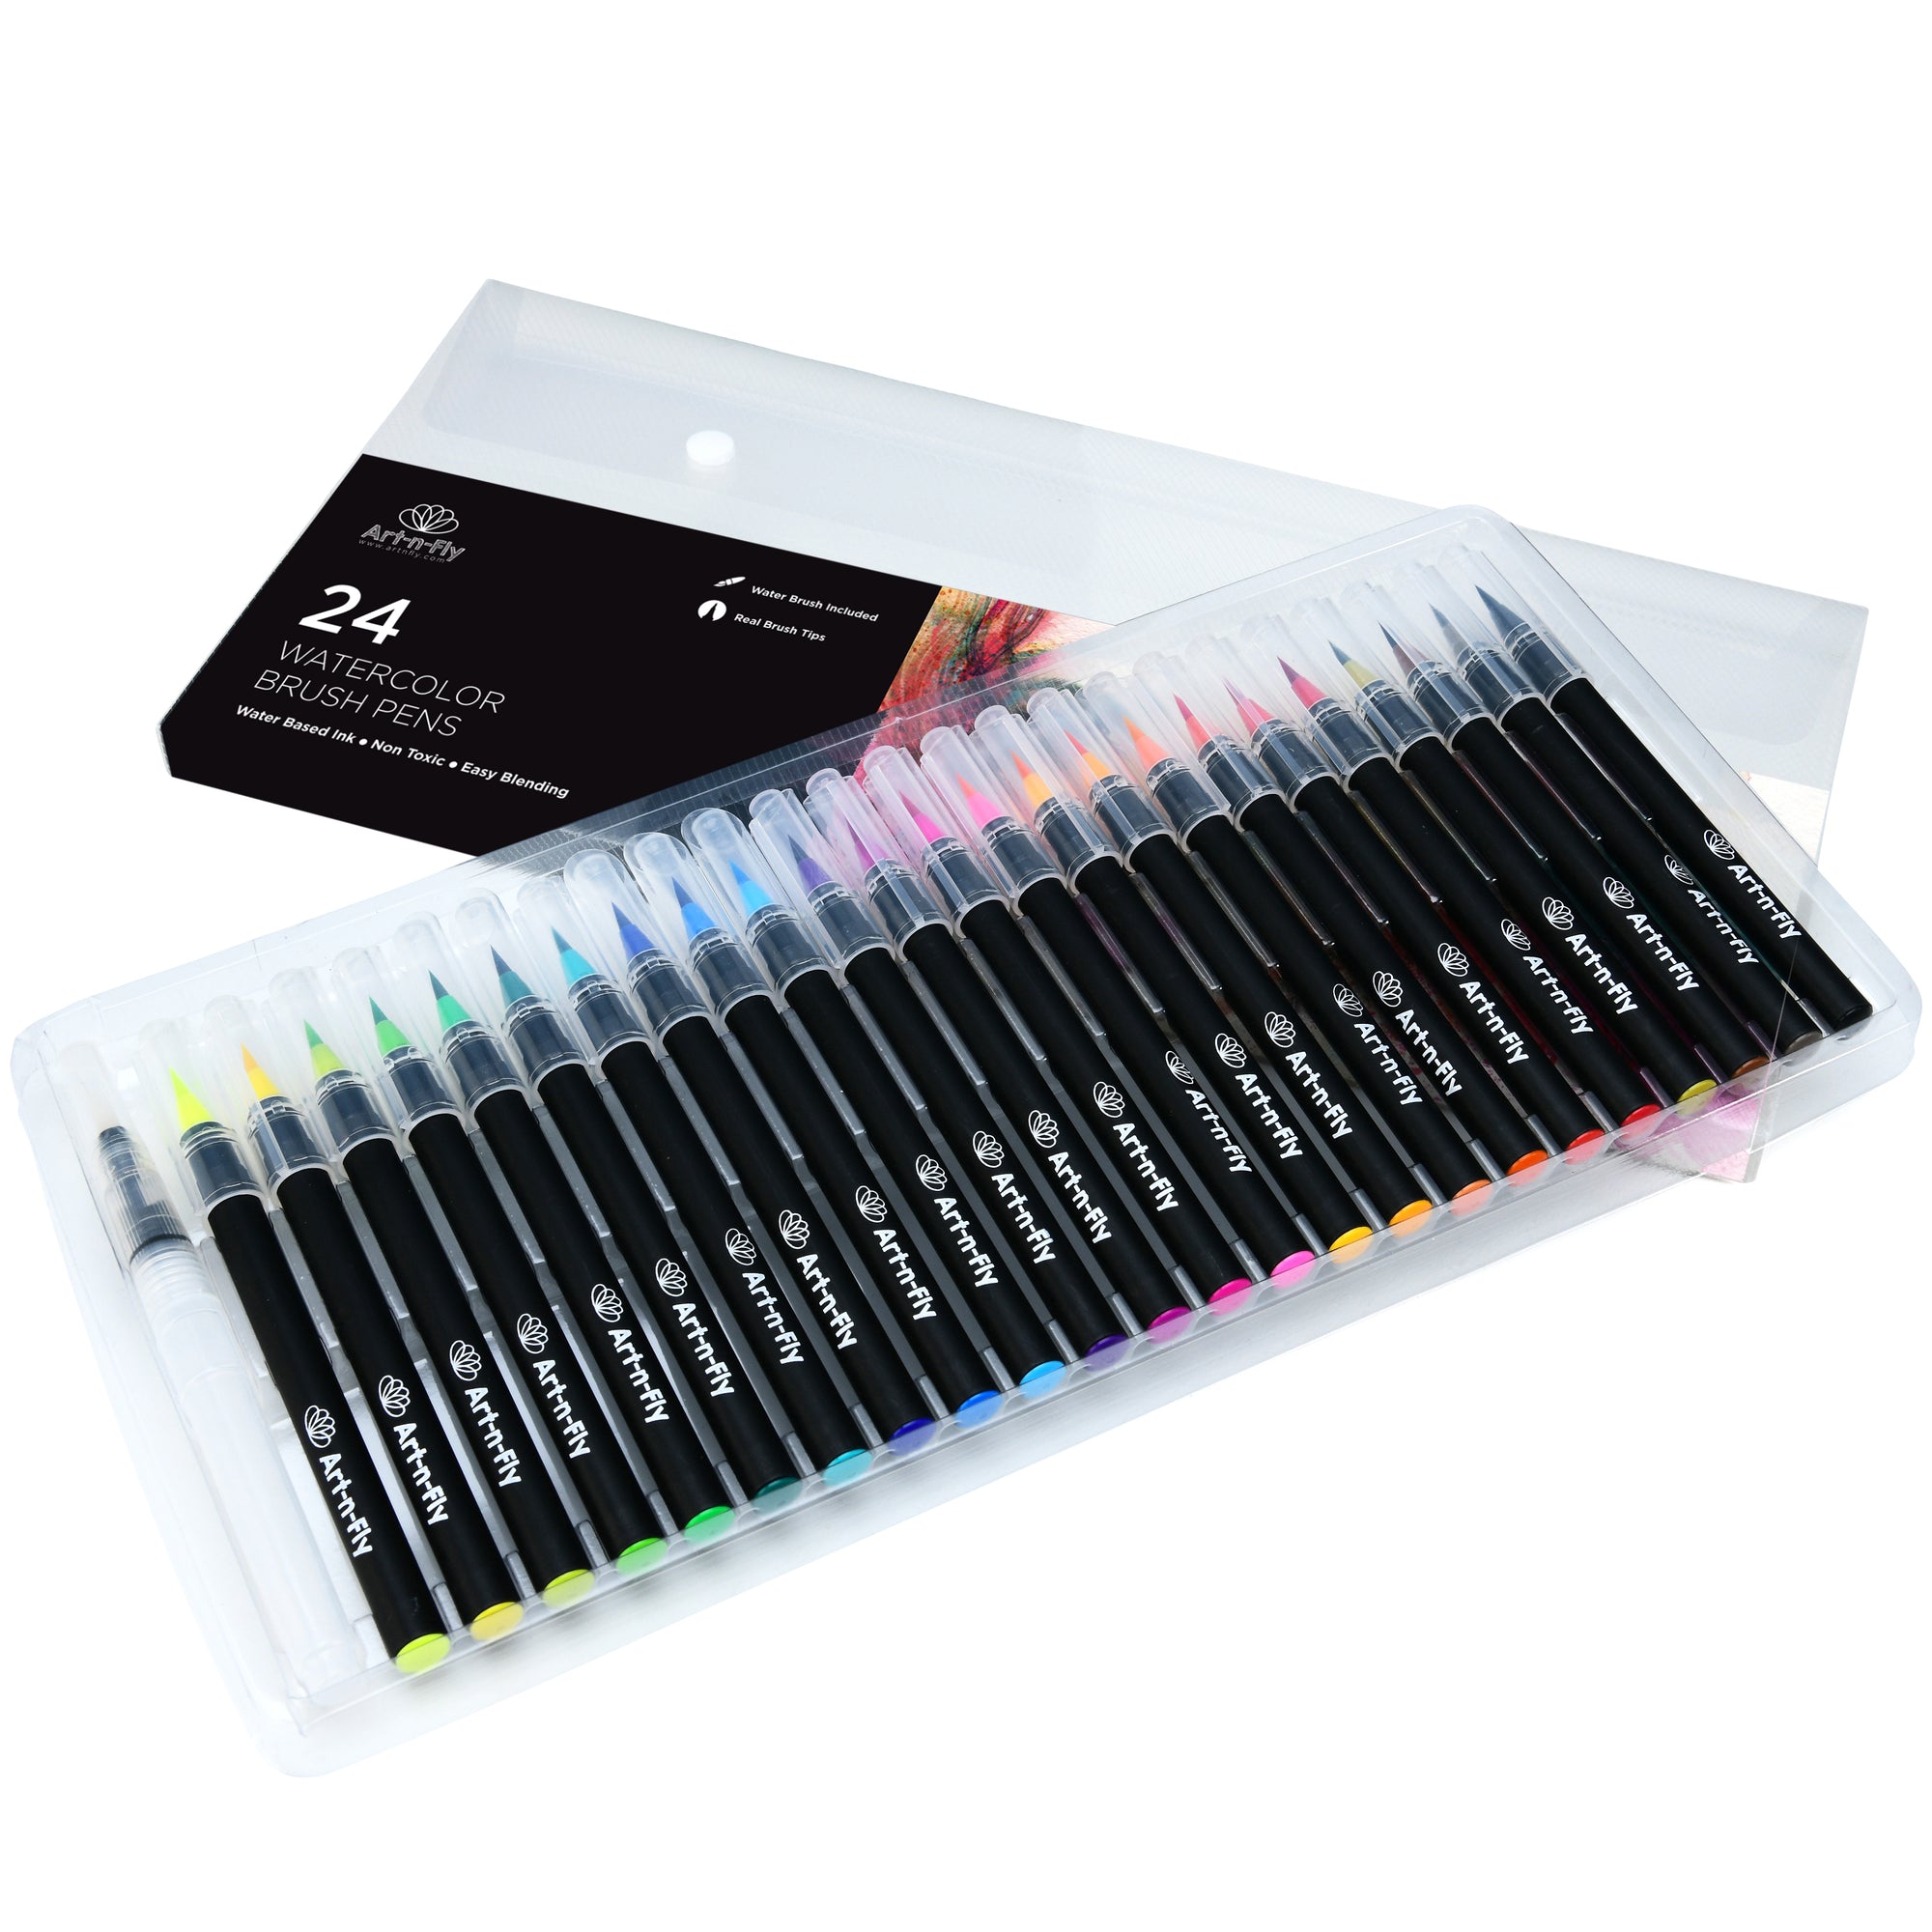 24 Watercolor Paint Brush Pens - Art-n-Fly